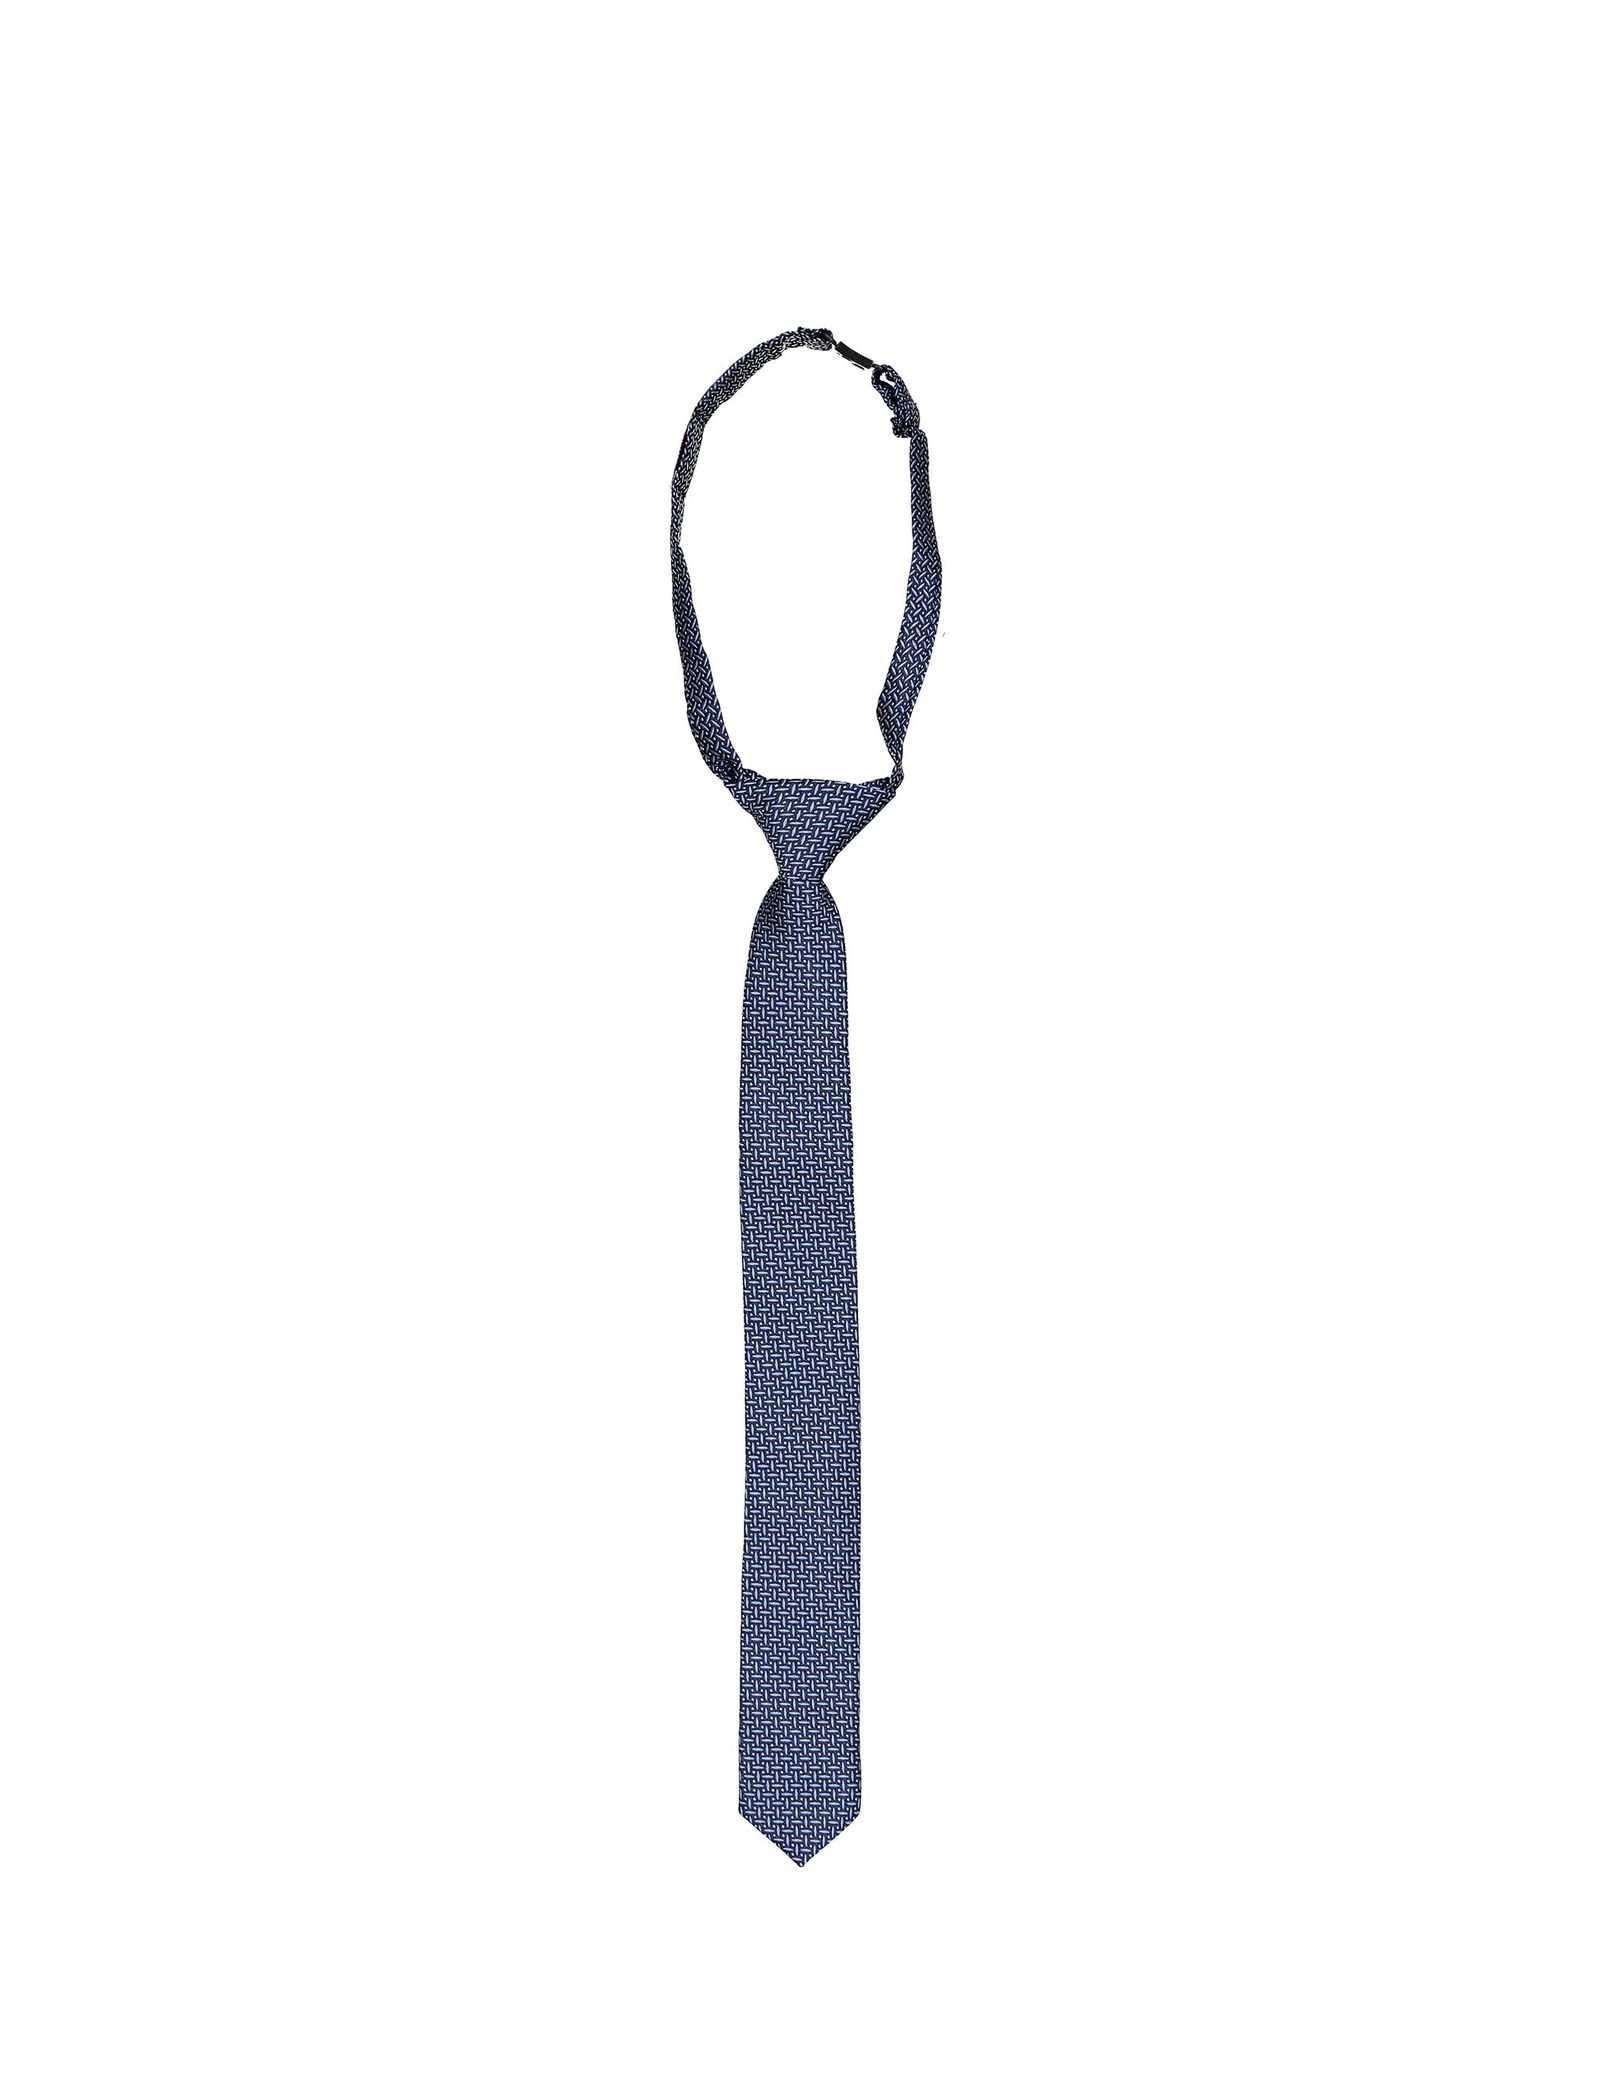 کراوات طرح دار پسرانه - بلوکیدز تک سایز - آبي - 2